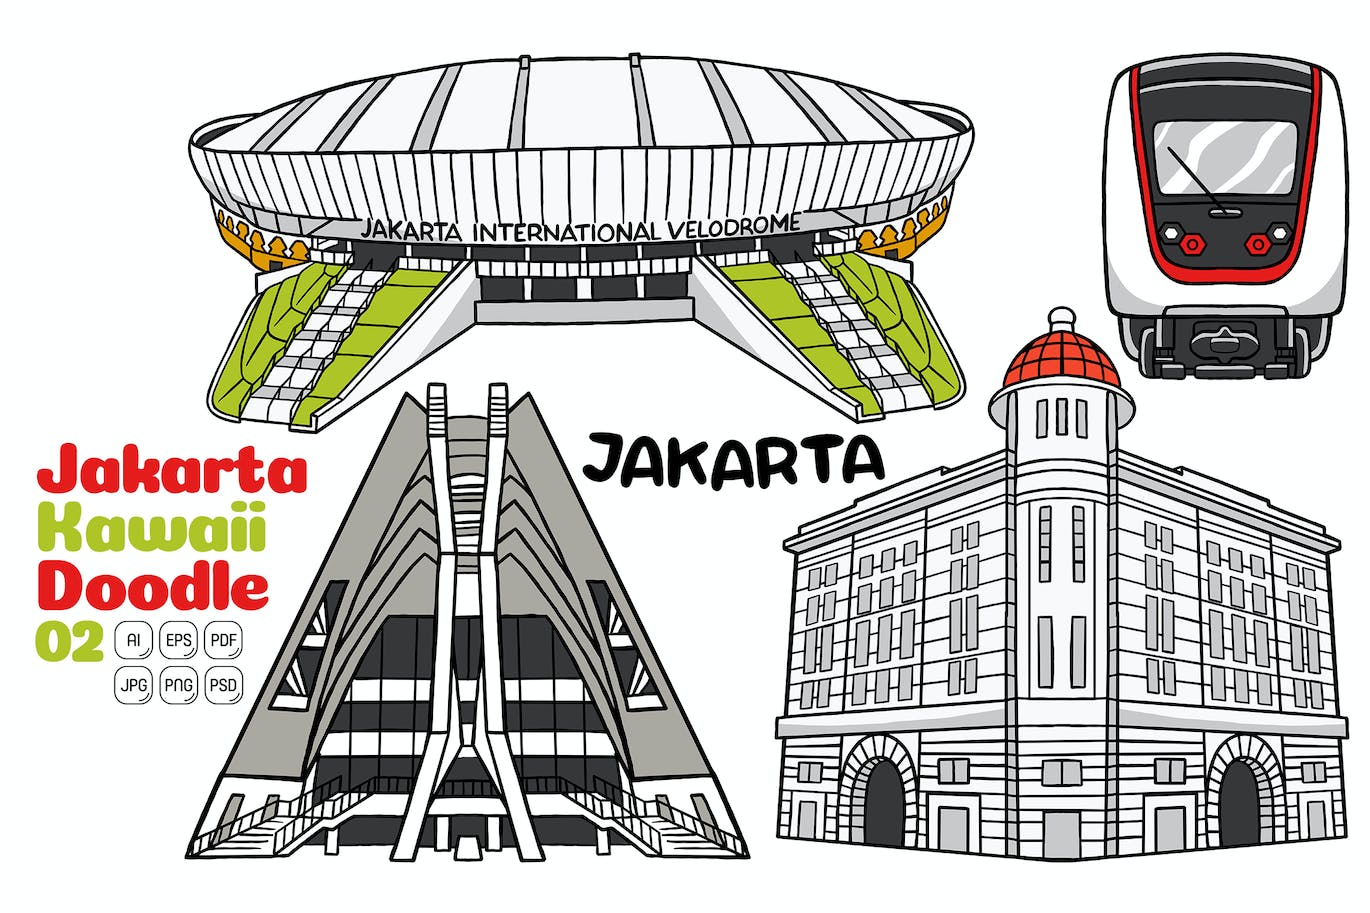 雅加达涂鸦艺术风格矢量插画 Jakarta Kawaii Doodle Vector Illustration #02 图片素材 第1张